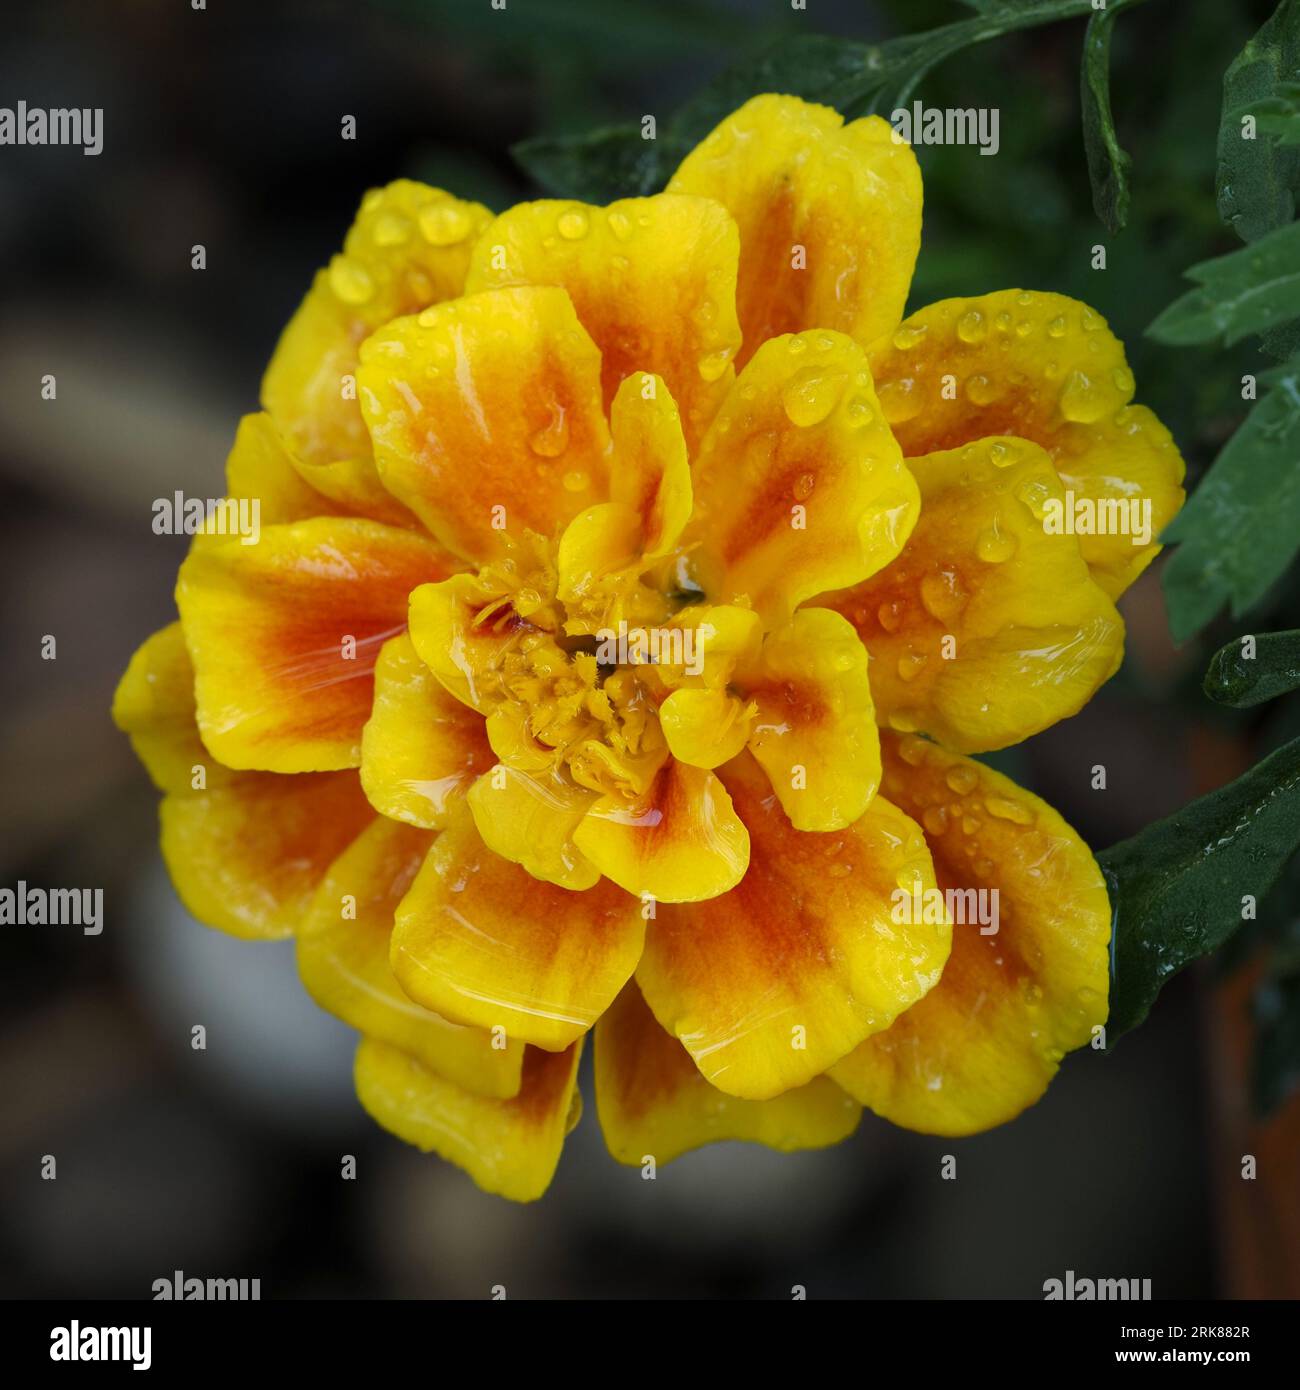 French Marigold. Scientific name: Tagetes patula. Family: Asteraceae. Order: Asterales. Kingdom: Plantae. Stock Photo